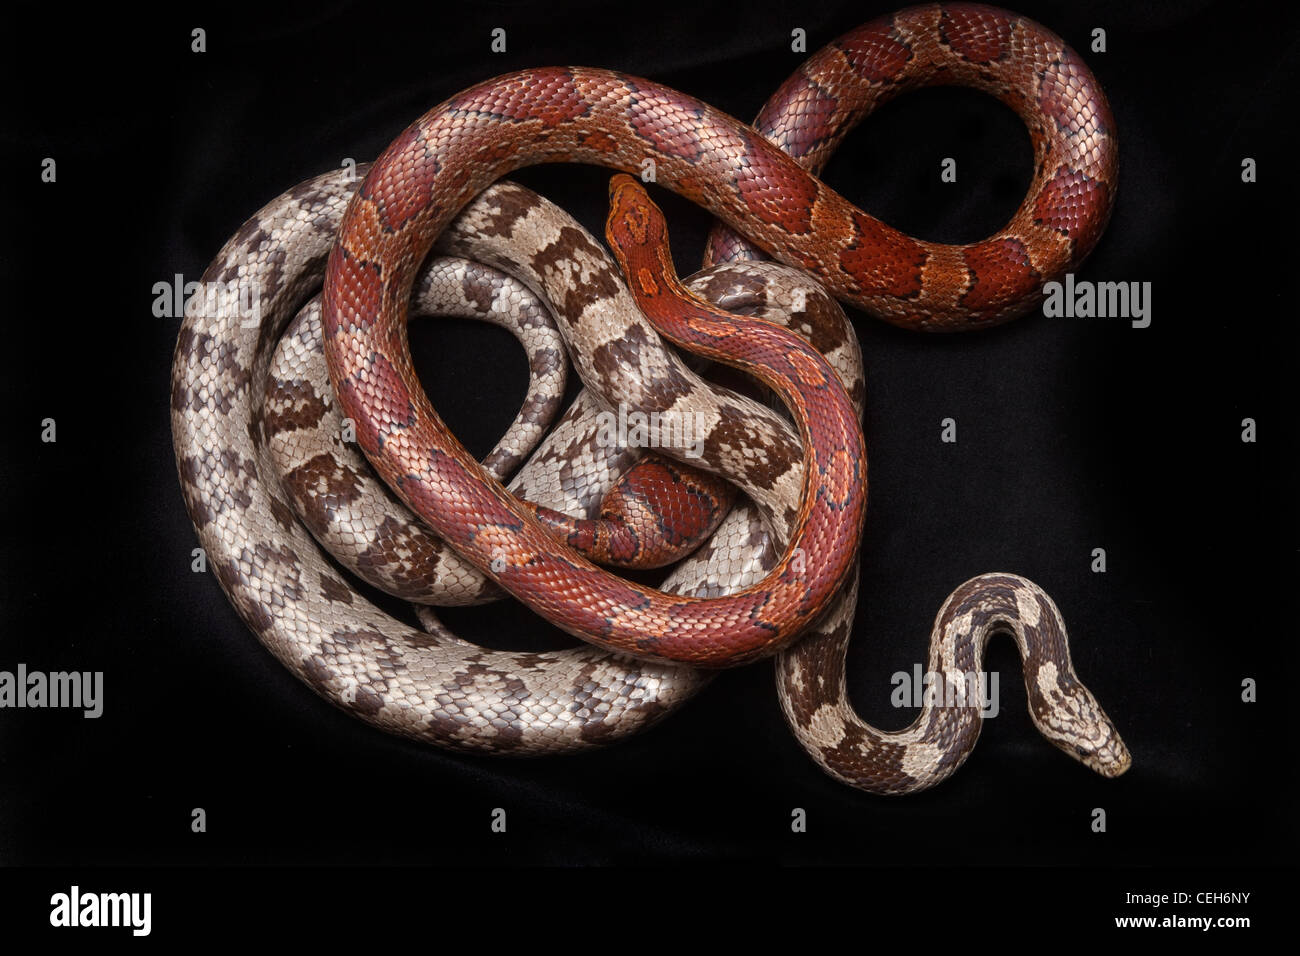 Corn Snakes Pantherophis guttatus colour forms Stock Photo